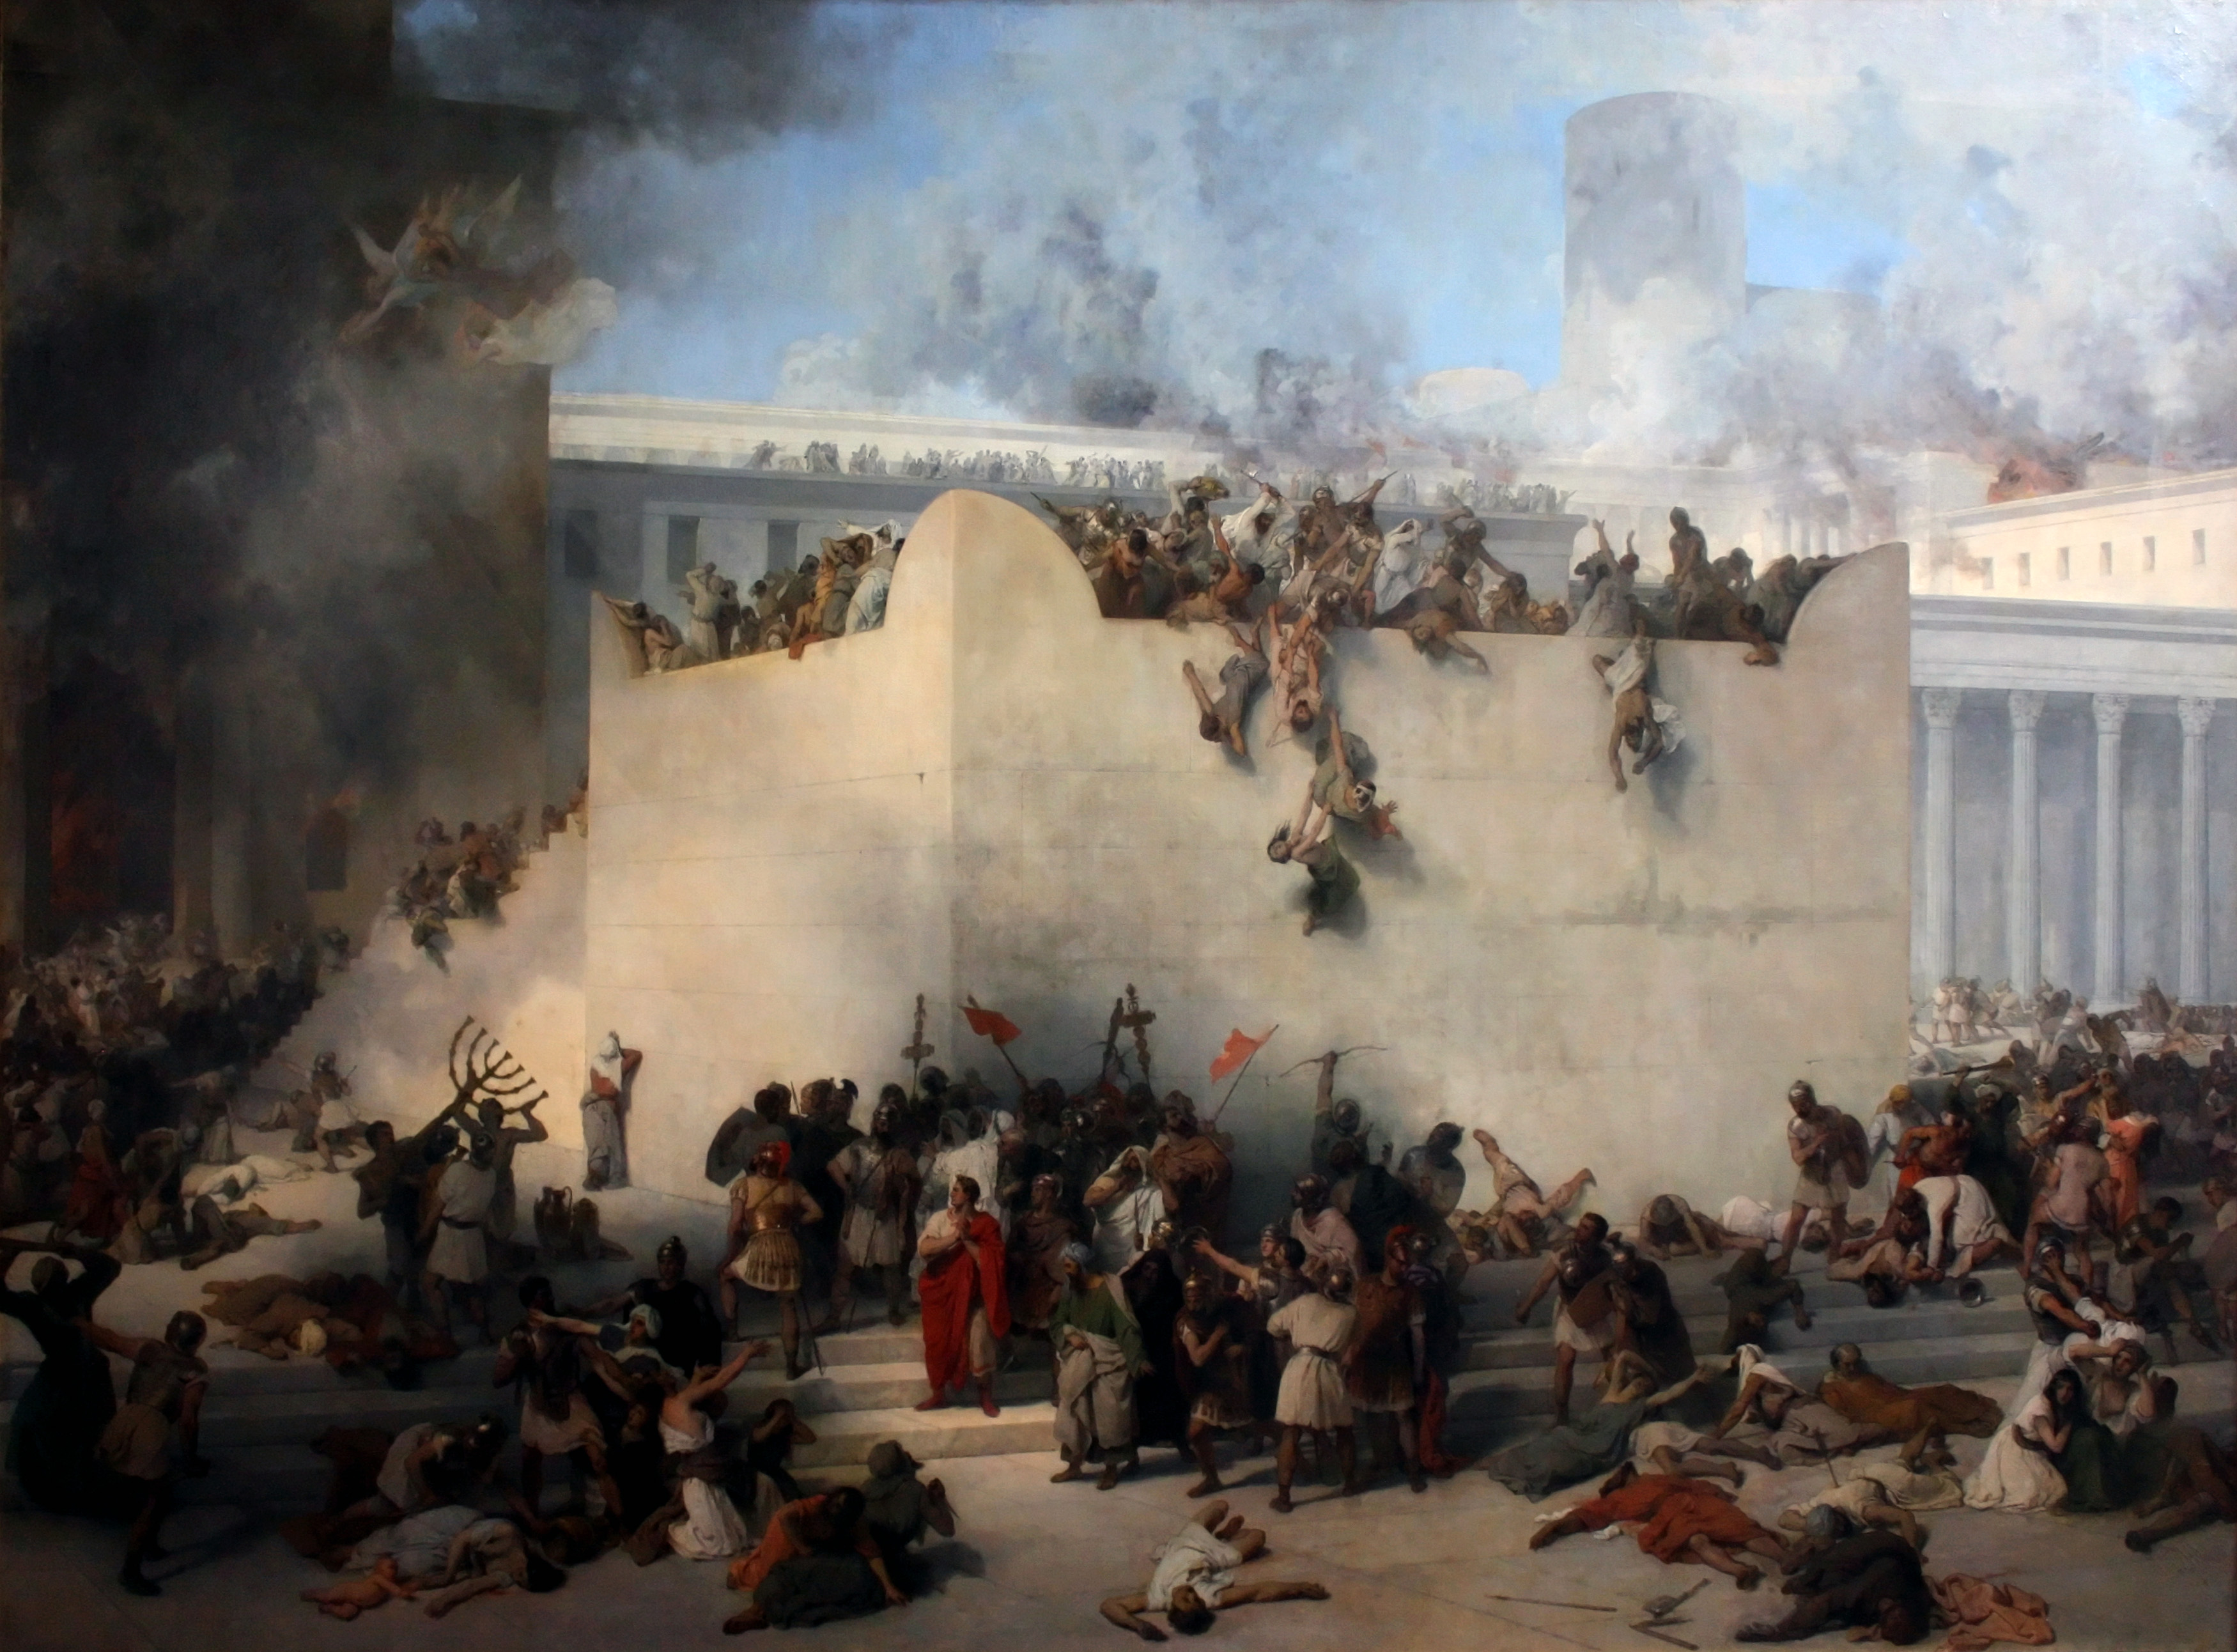 Destruction of Temple of Jerusalem